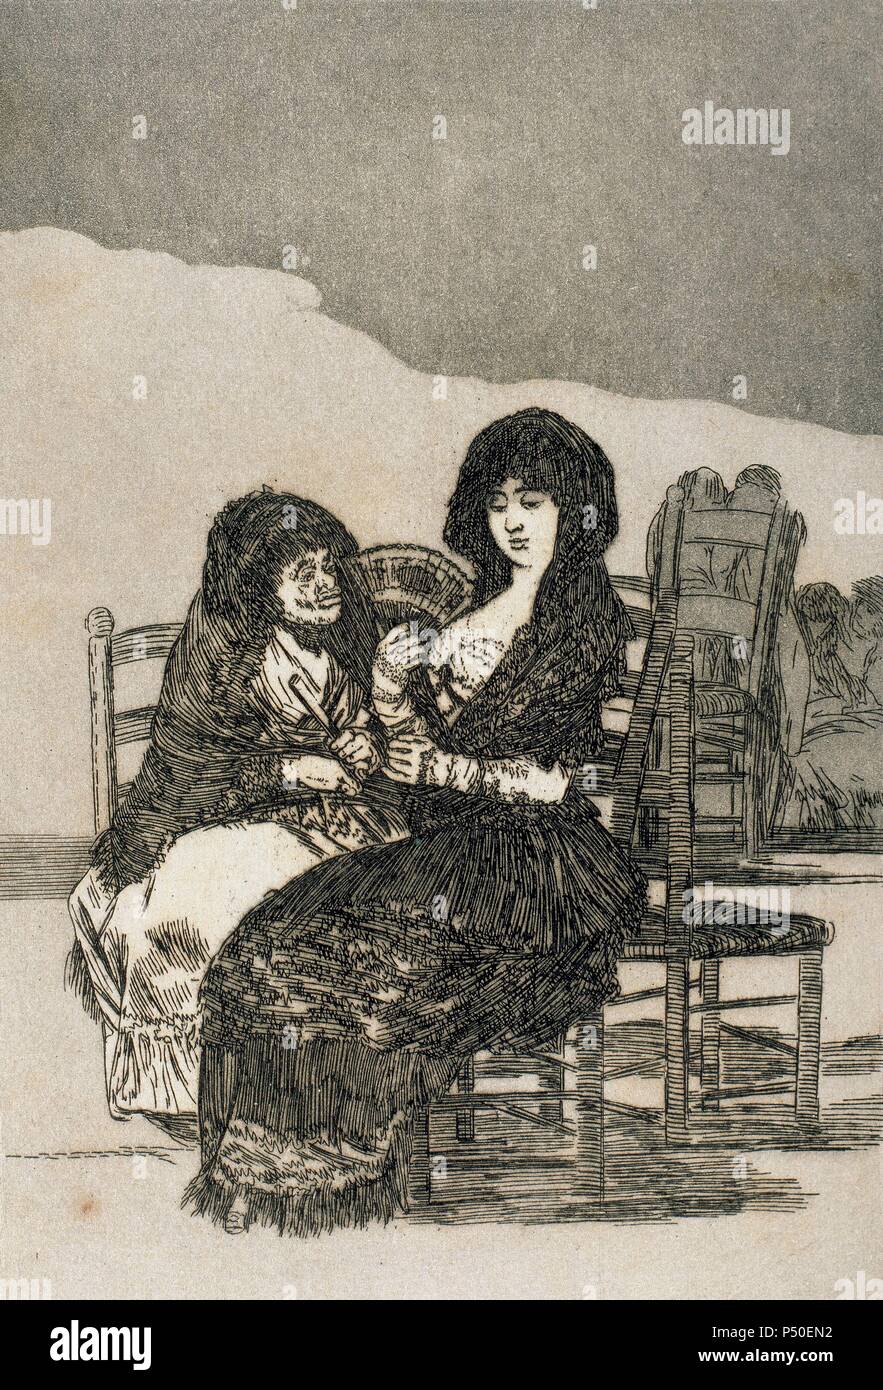 Francisco de Goya (1746-1828). Spanish painter and printmaker. Los Caprichos. 'Bellos Consejos' (Good Advice). Plate 15. Aquatint. 1799. Reproduction by M. Segui i Riera. Stock Photo